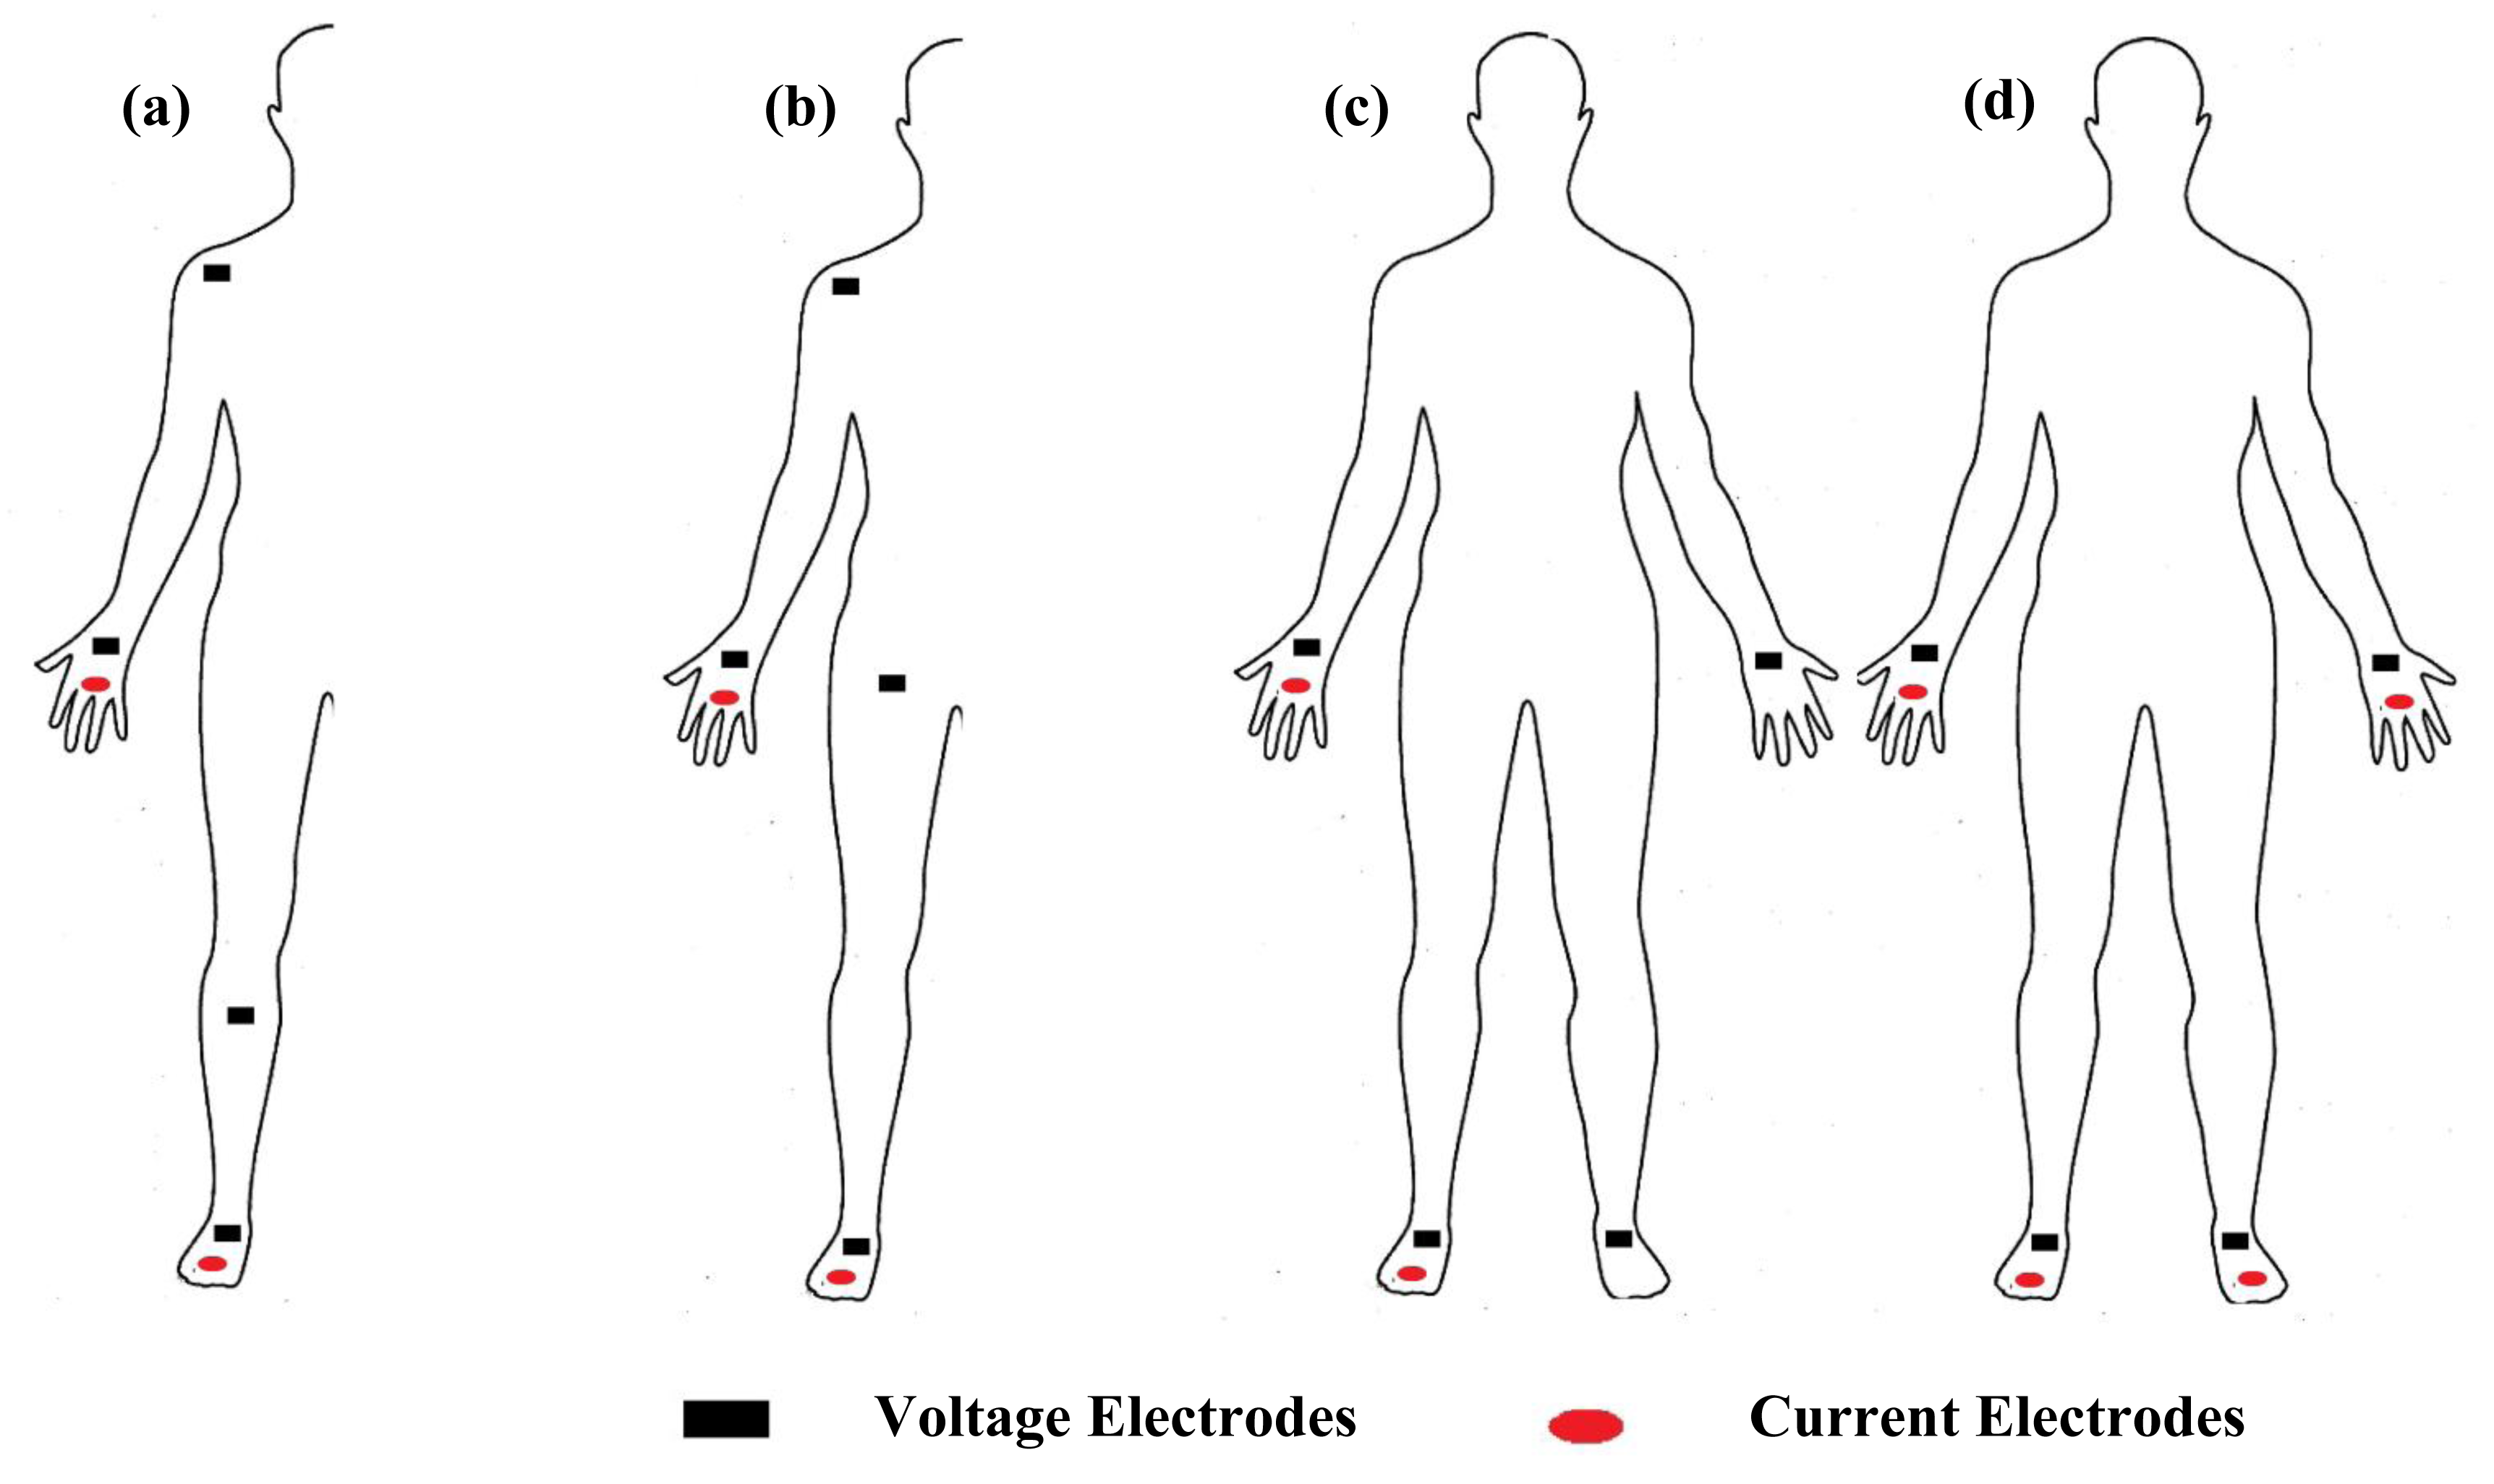  Bioelectrical Impedance Analysis